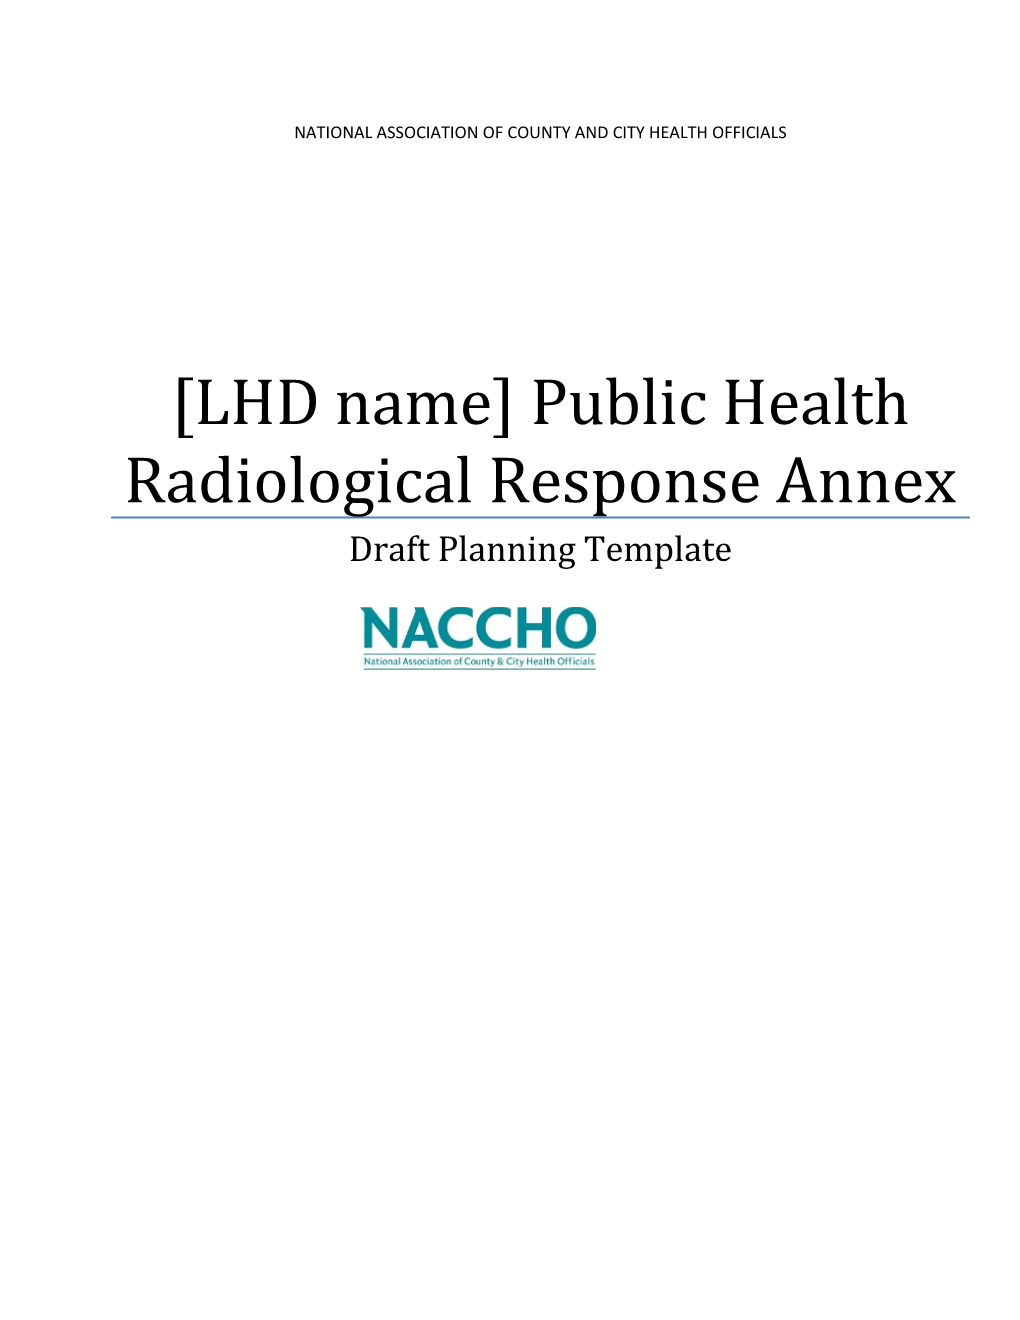 LHD Name Public Health Radiological Response Annex